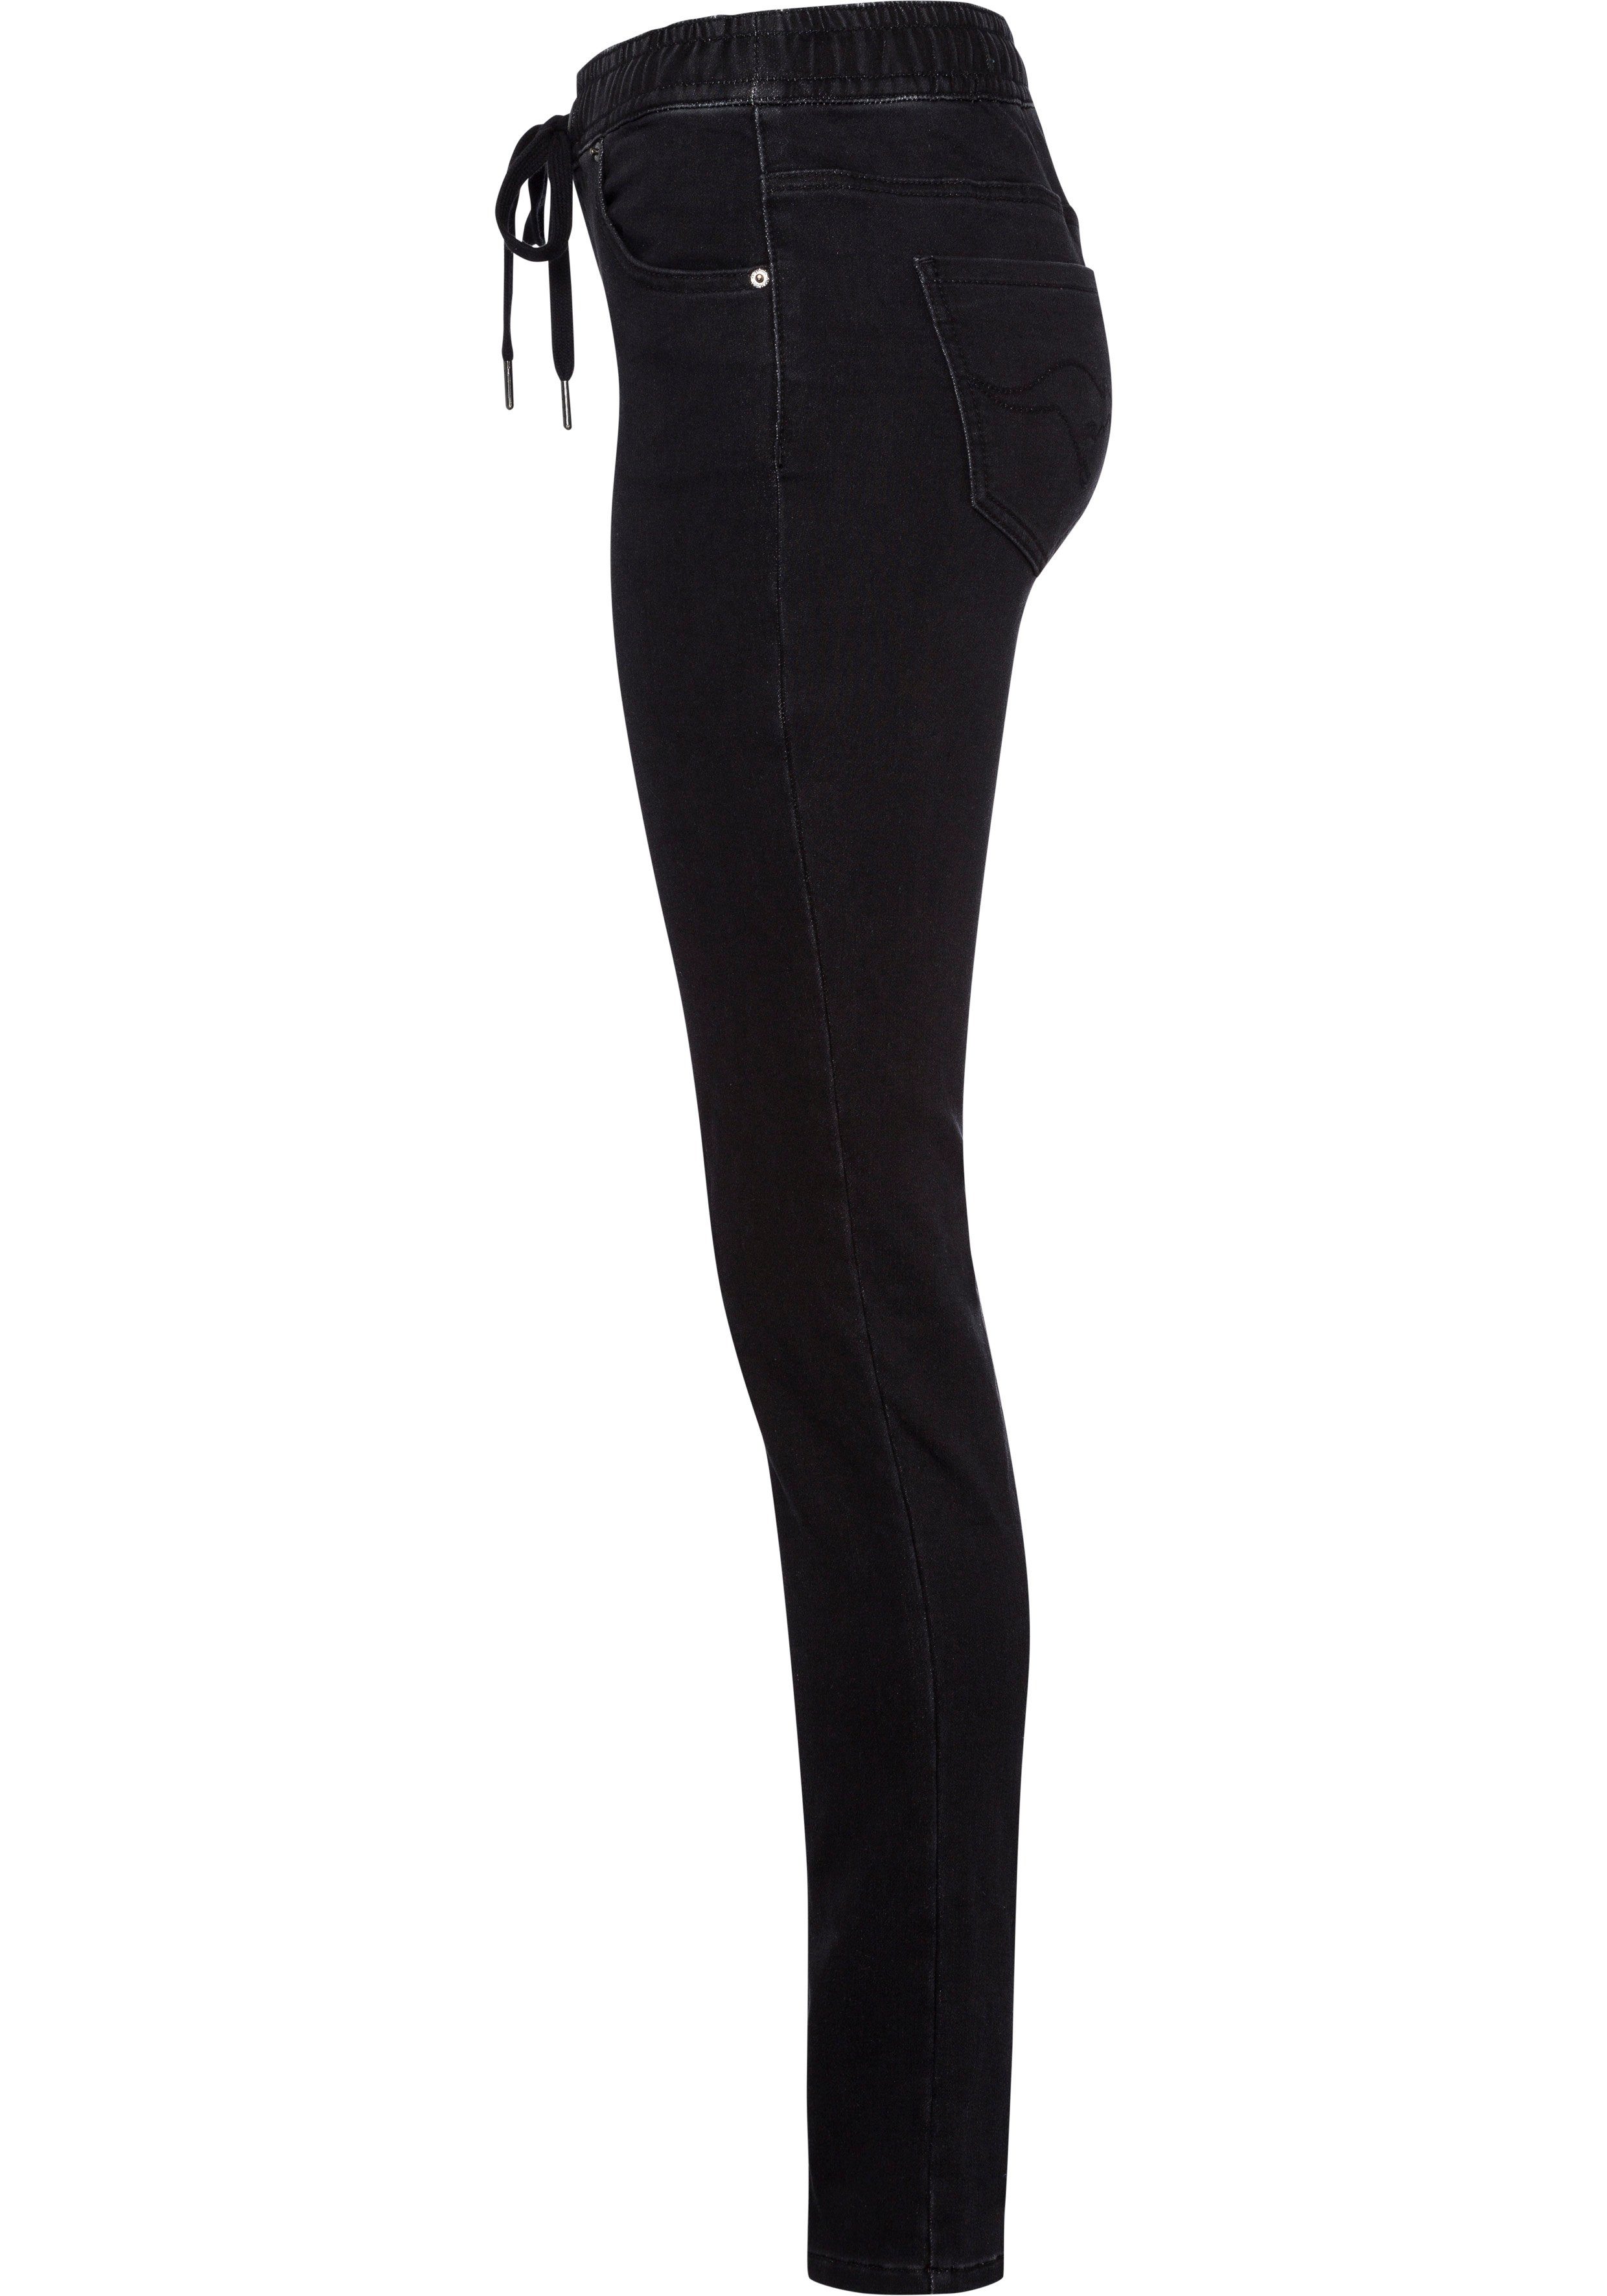 KangaROOS Jogg Pants in Denim-Optik schwarz mit elastischem Bündchen